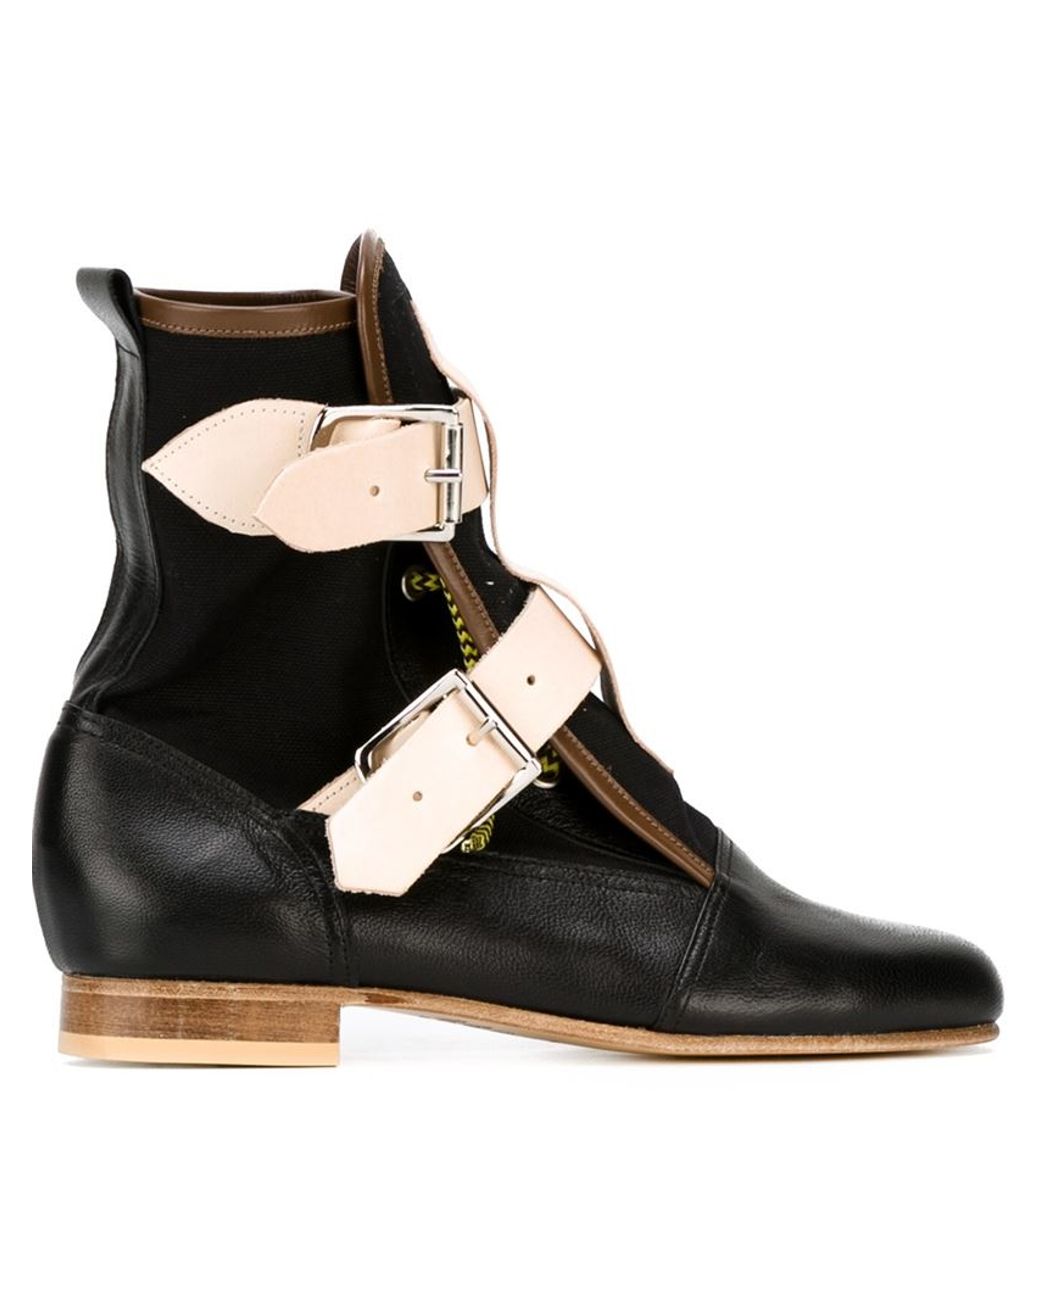 Vivienne Westwood 'Seditionaries' Boots in Black | Lyst